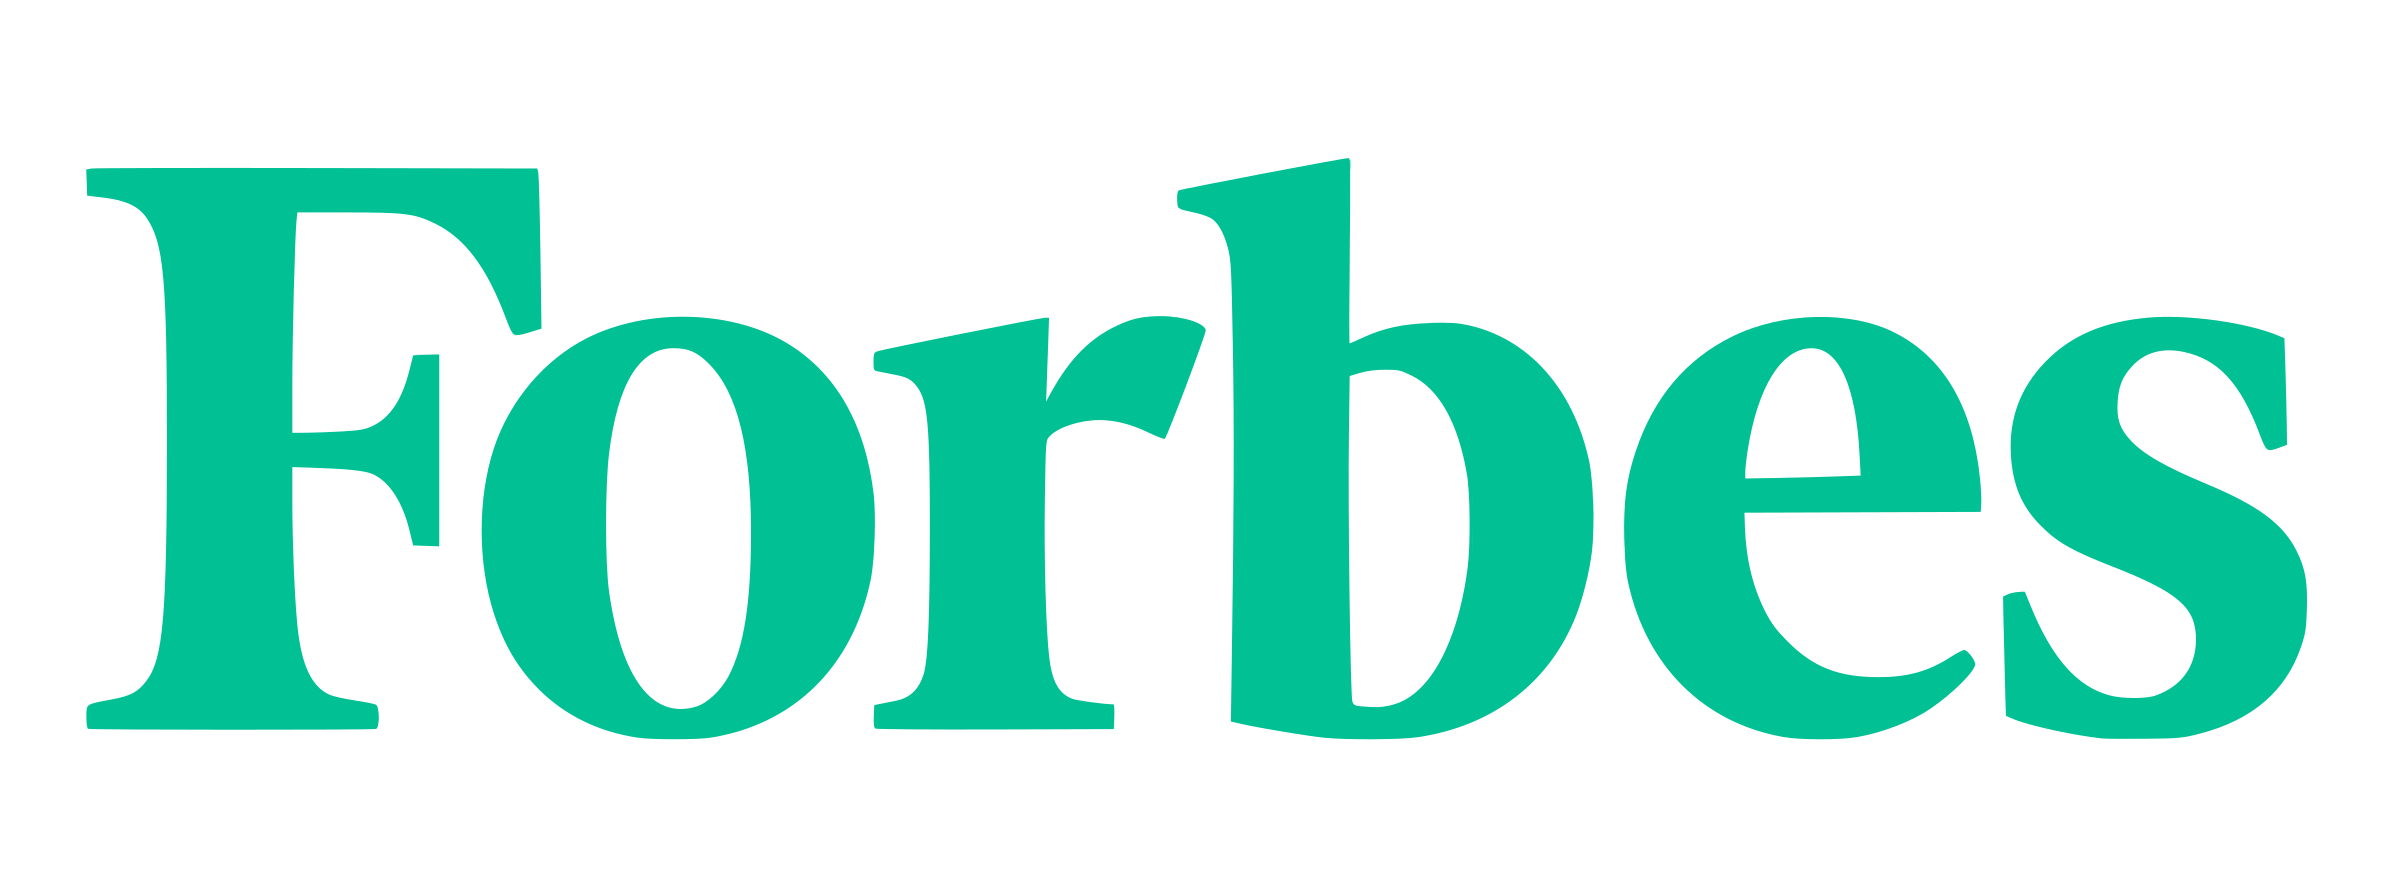 forbes-logo-black-and-greenpng